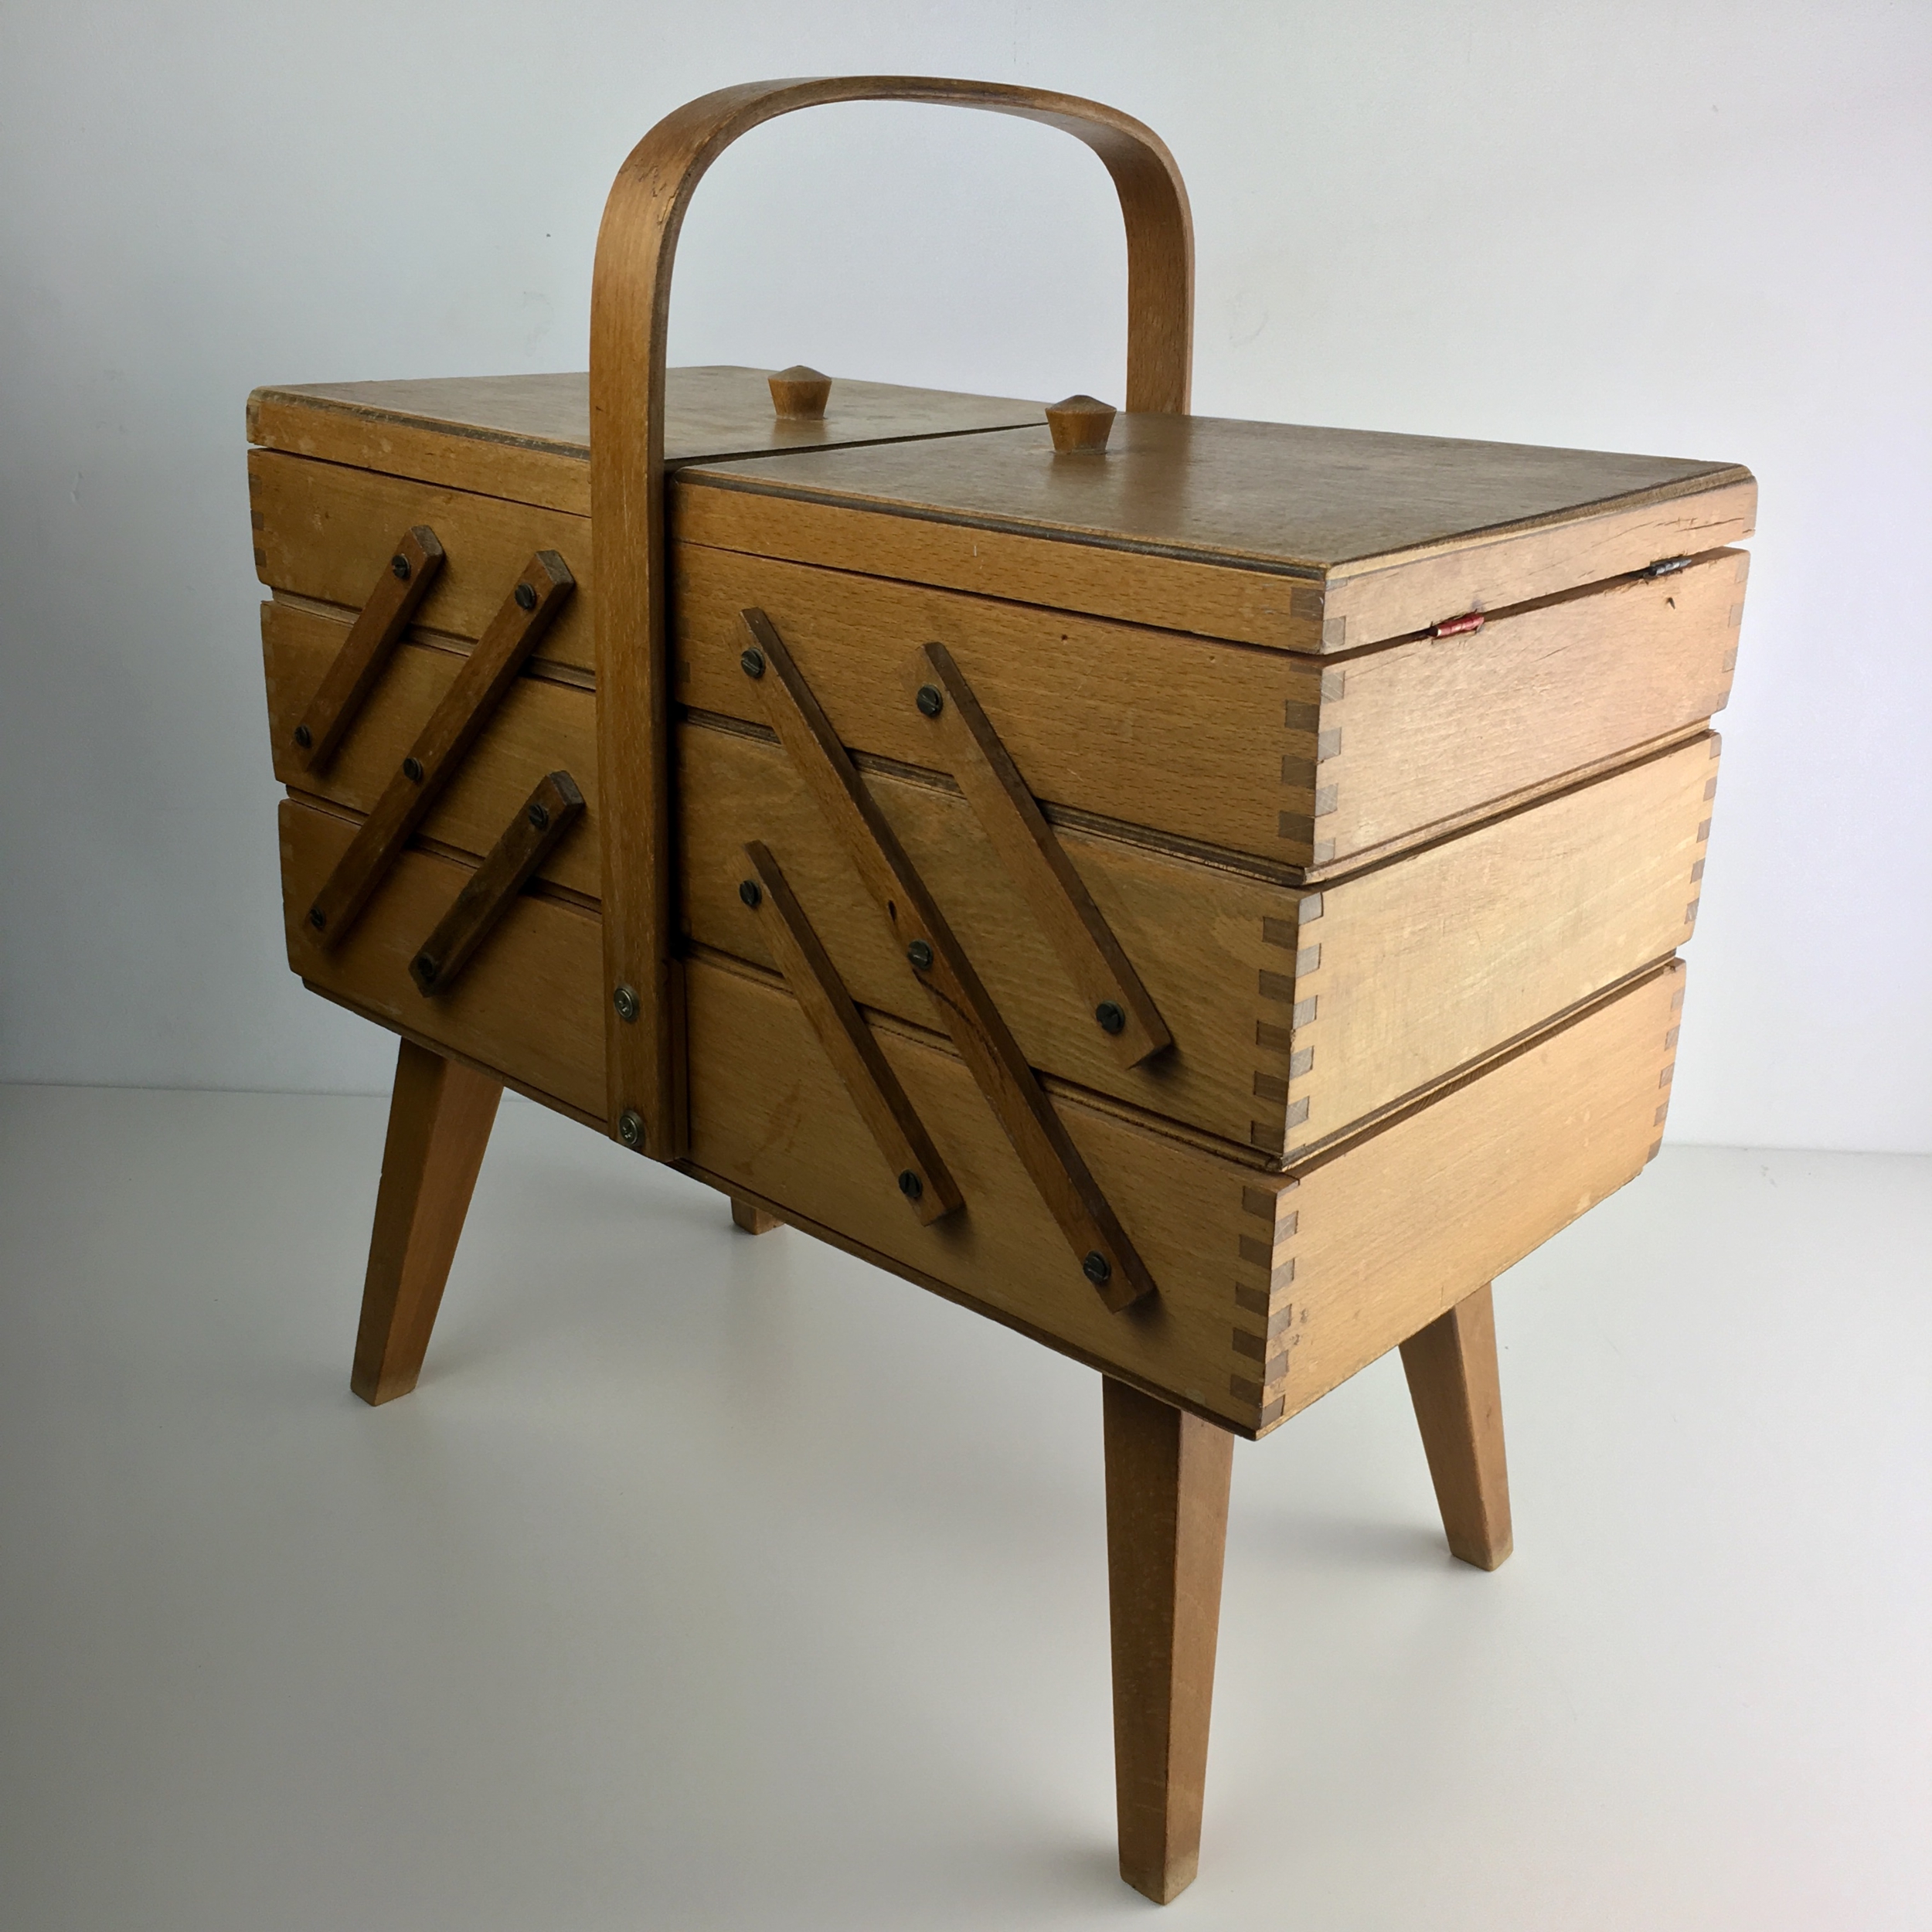 travailleuse en bois brocup vente en ligne dobjets vintage et durables